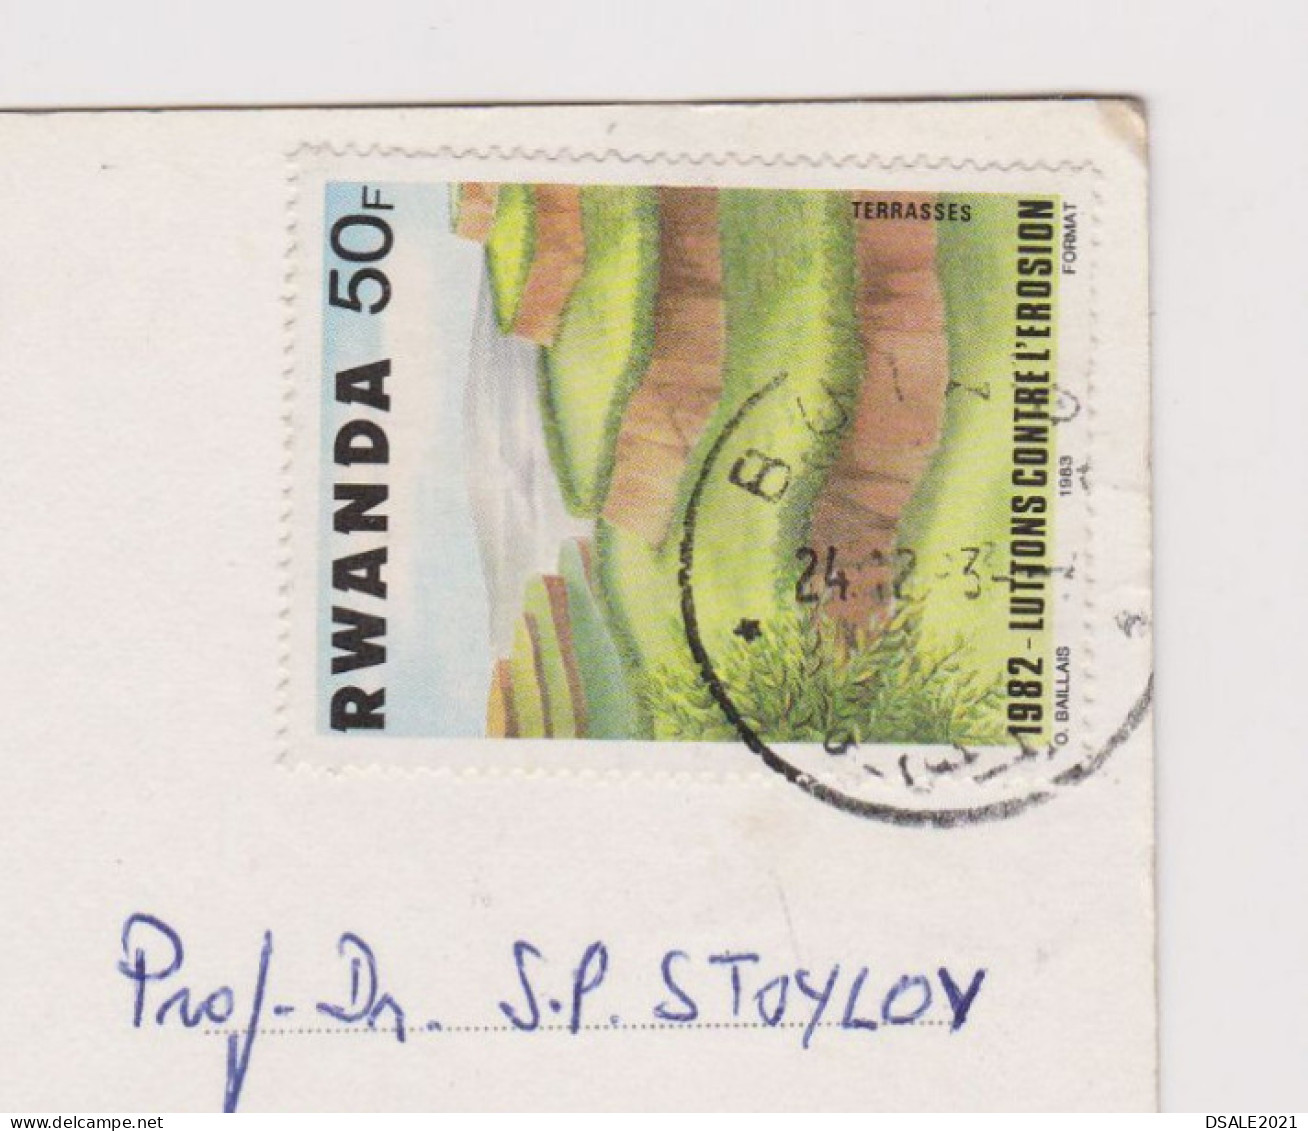 RWANDA Karisimbi Volcano View, Vintage 1980s Photo Postcard With 50F Topic Stamp Sent Abroad To Bulgaria (567) - Cartas & Documentos